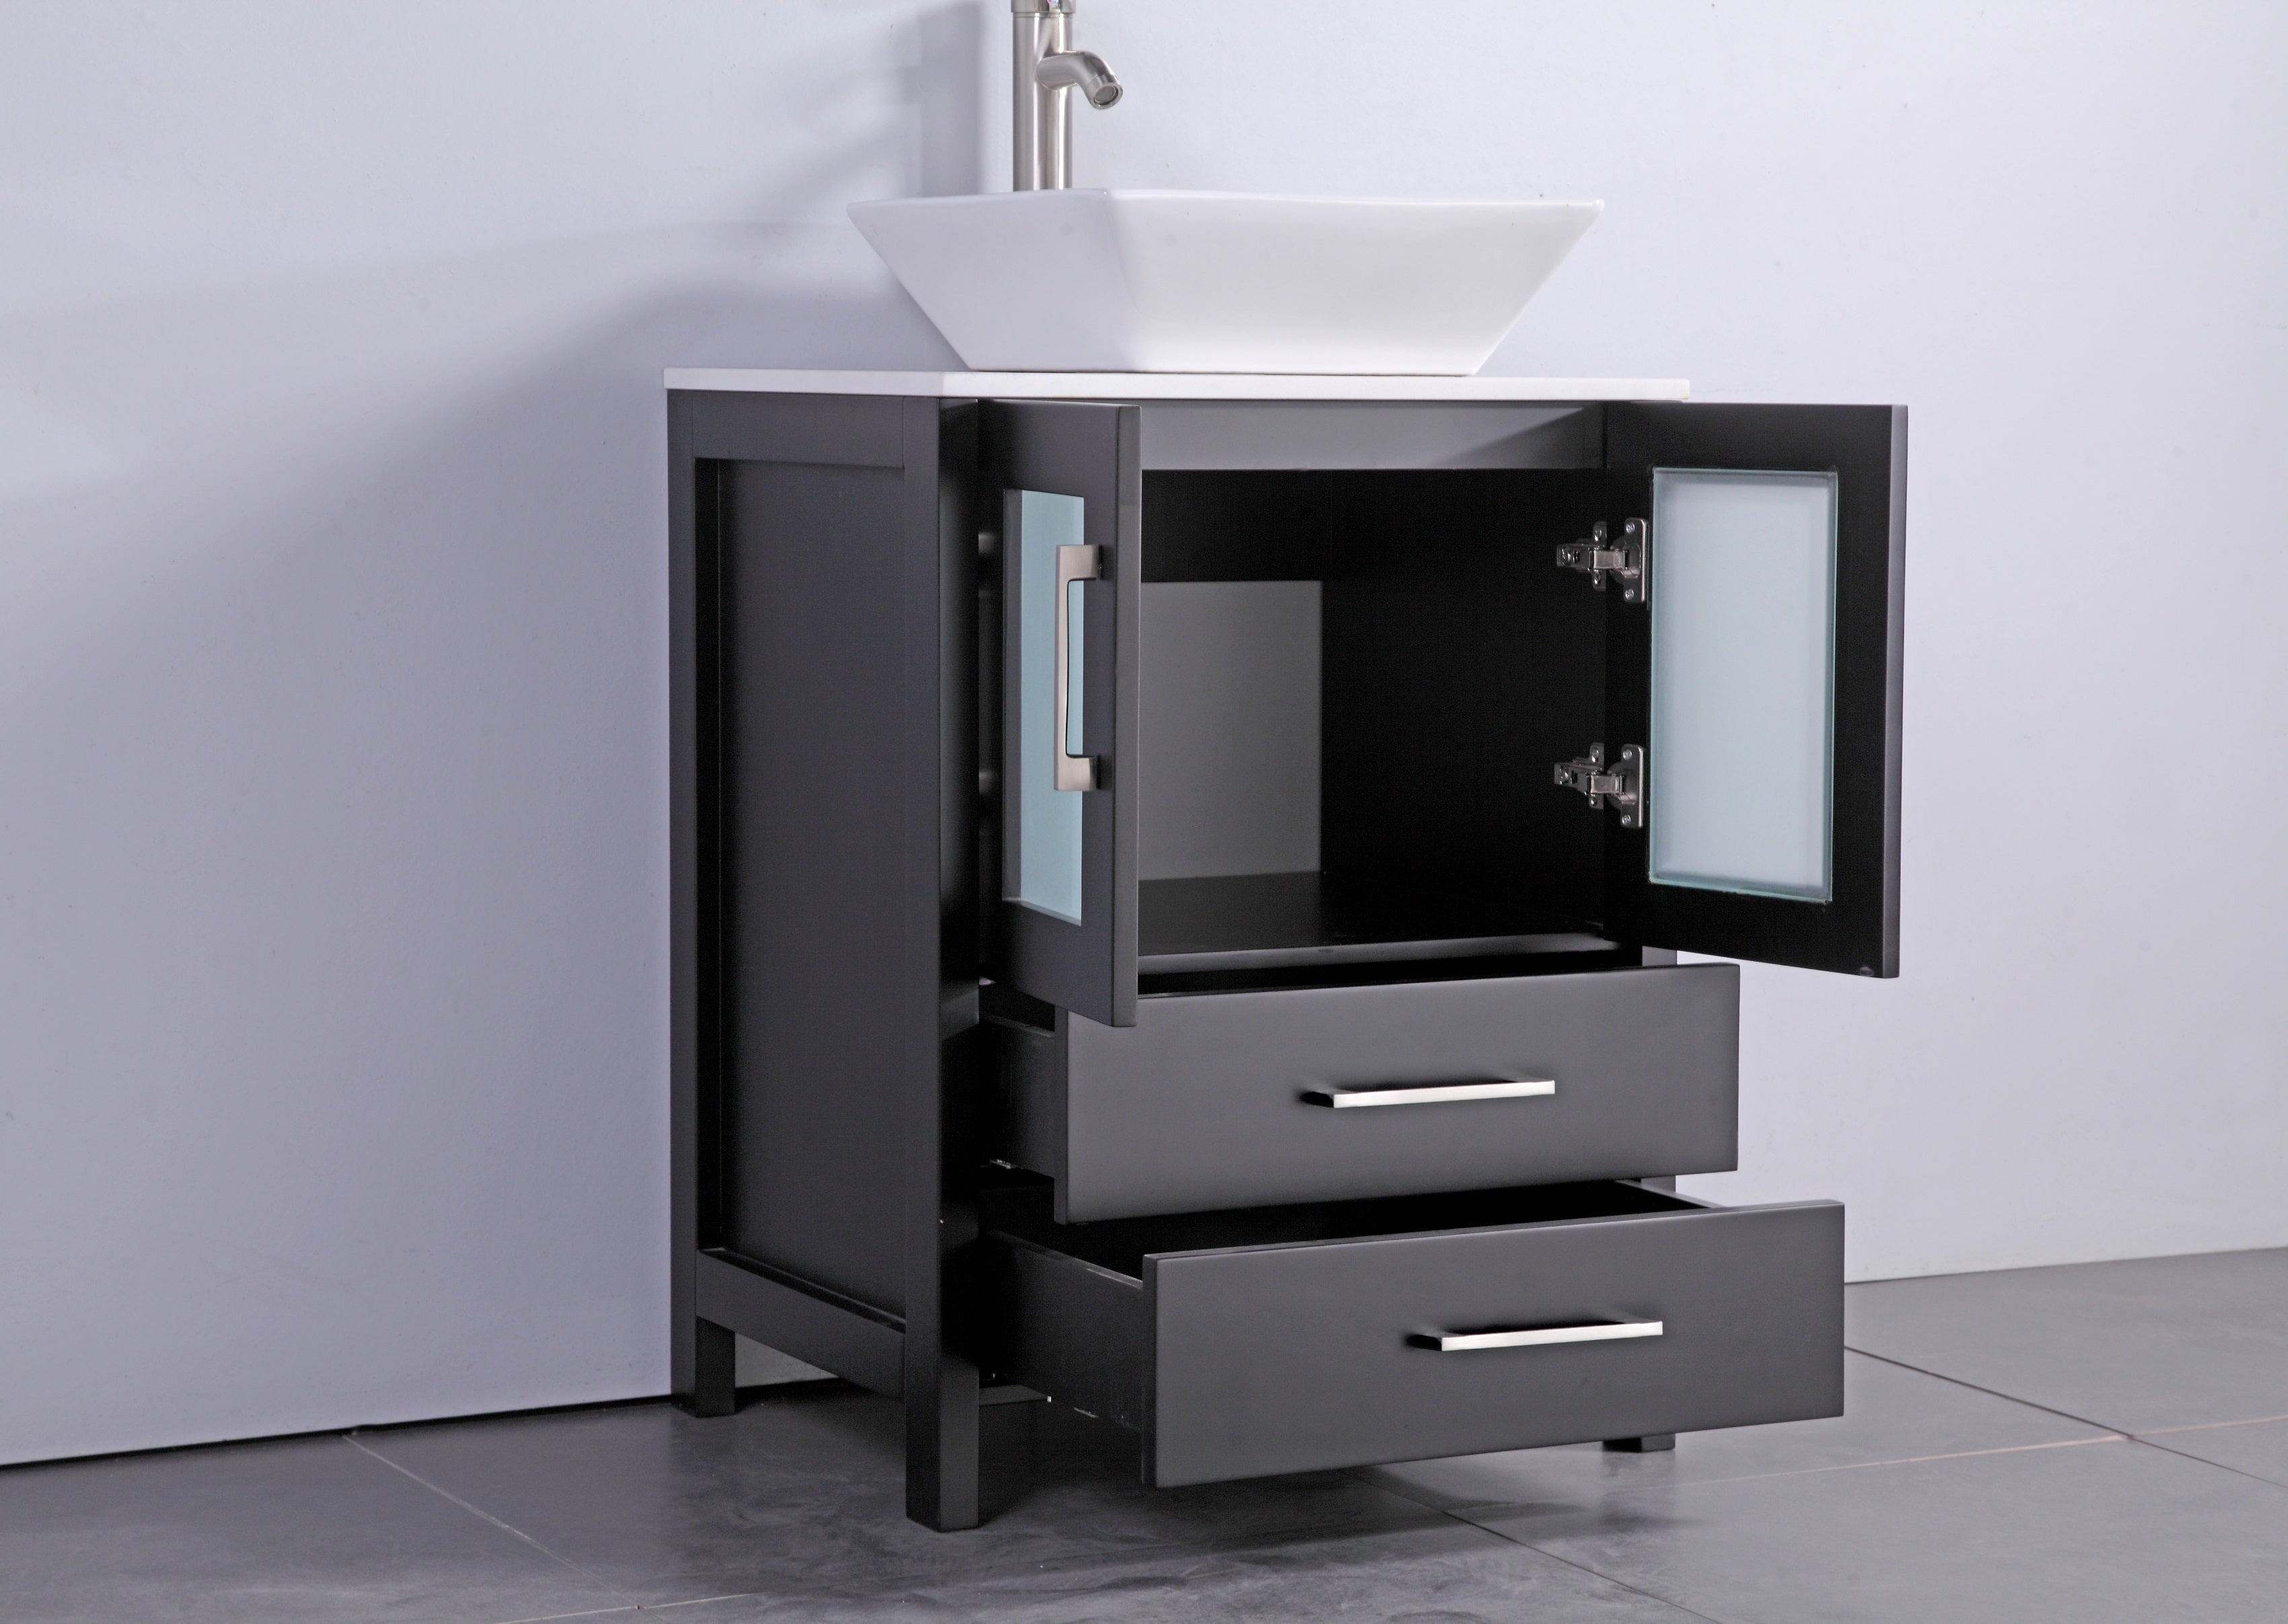 Vanity Art - Monaco 60" Double Vessel Sink Bathroom Vanity Set with Sinks and Mirrors - 1 Side Cabinet - Bhdepot 